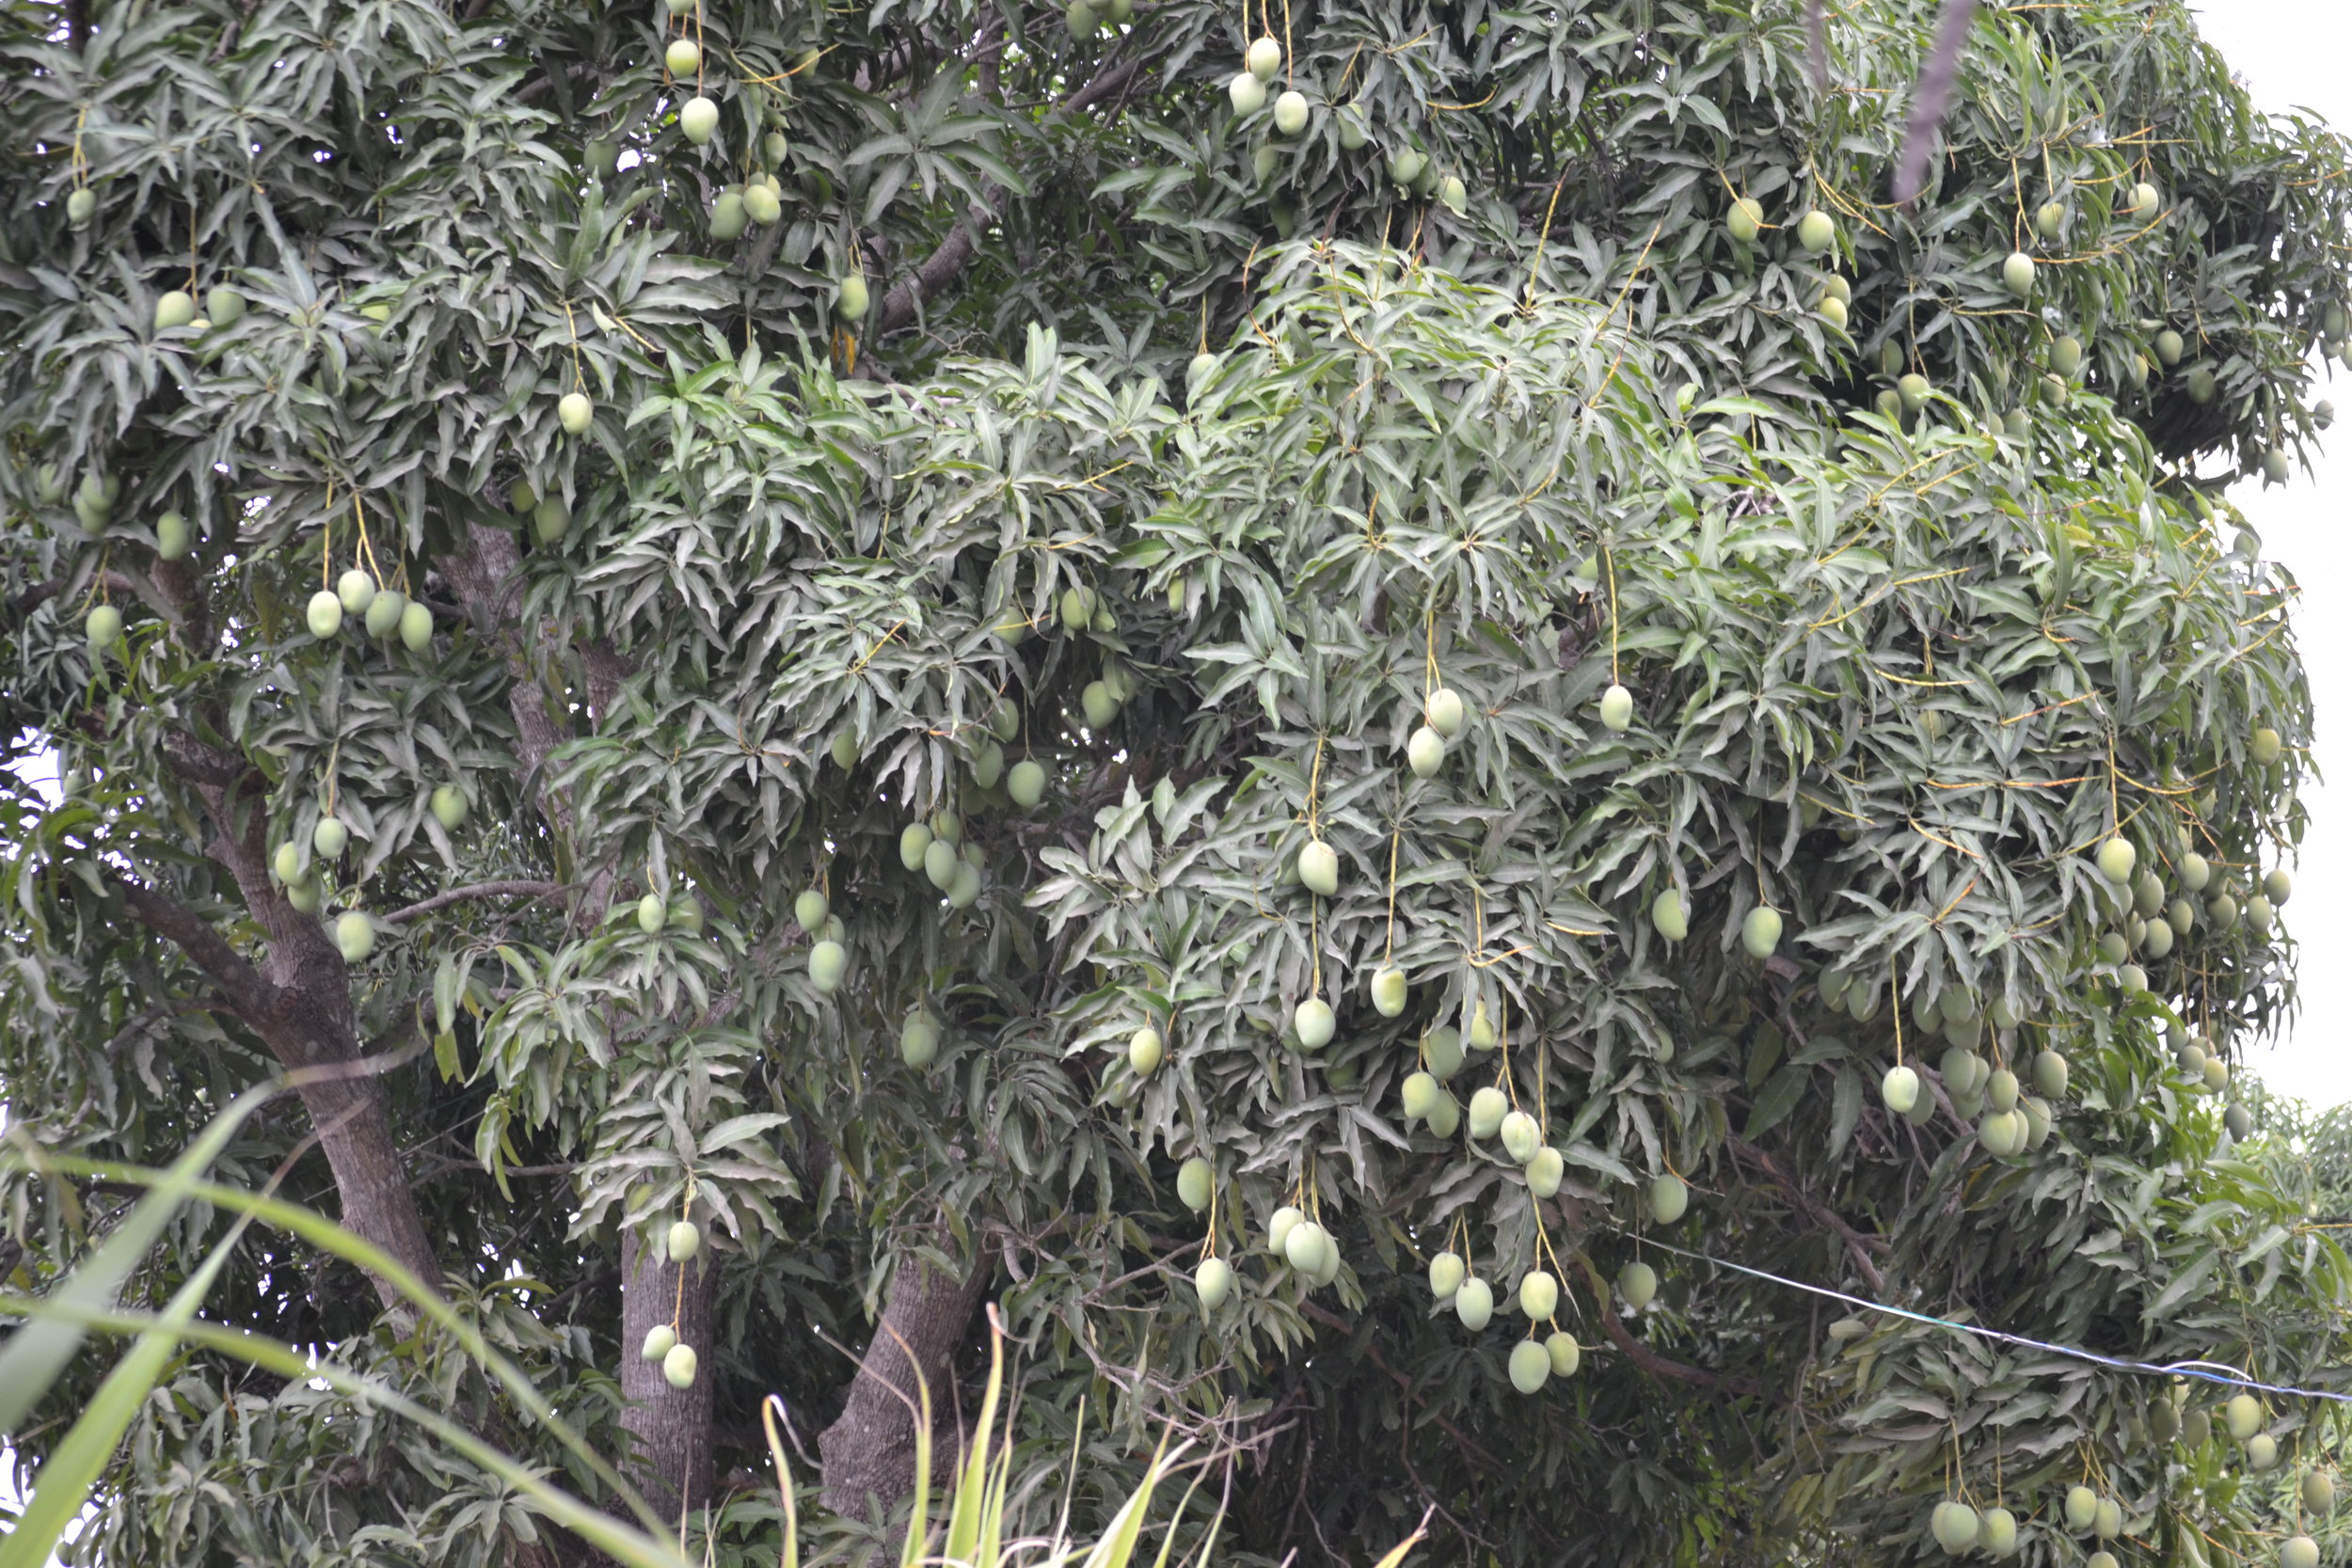  Despite the drought, well established mango trees produce bountiful fruit. 